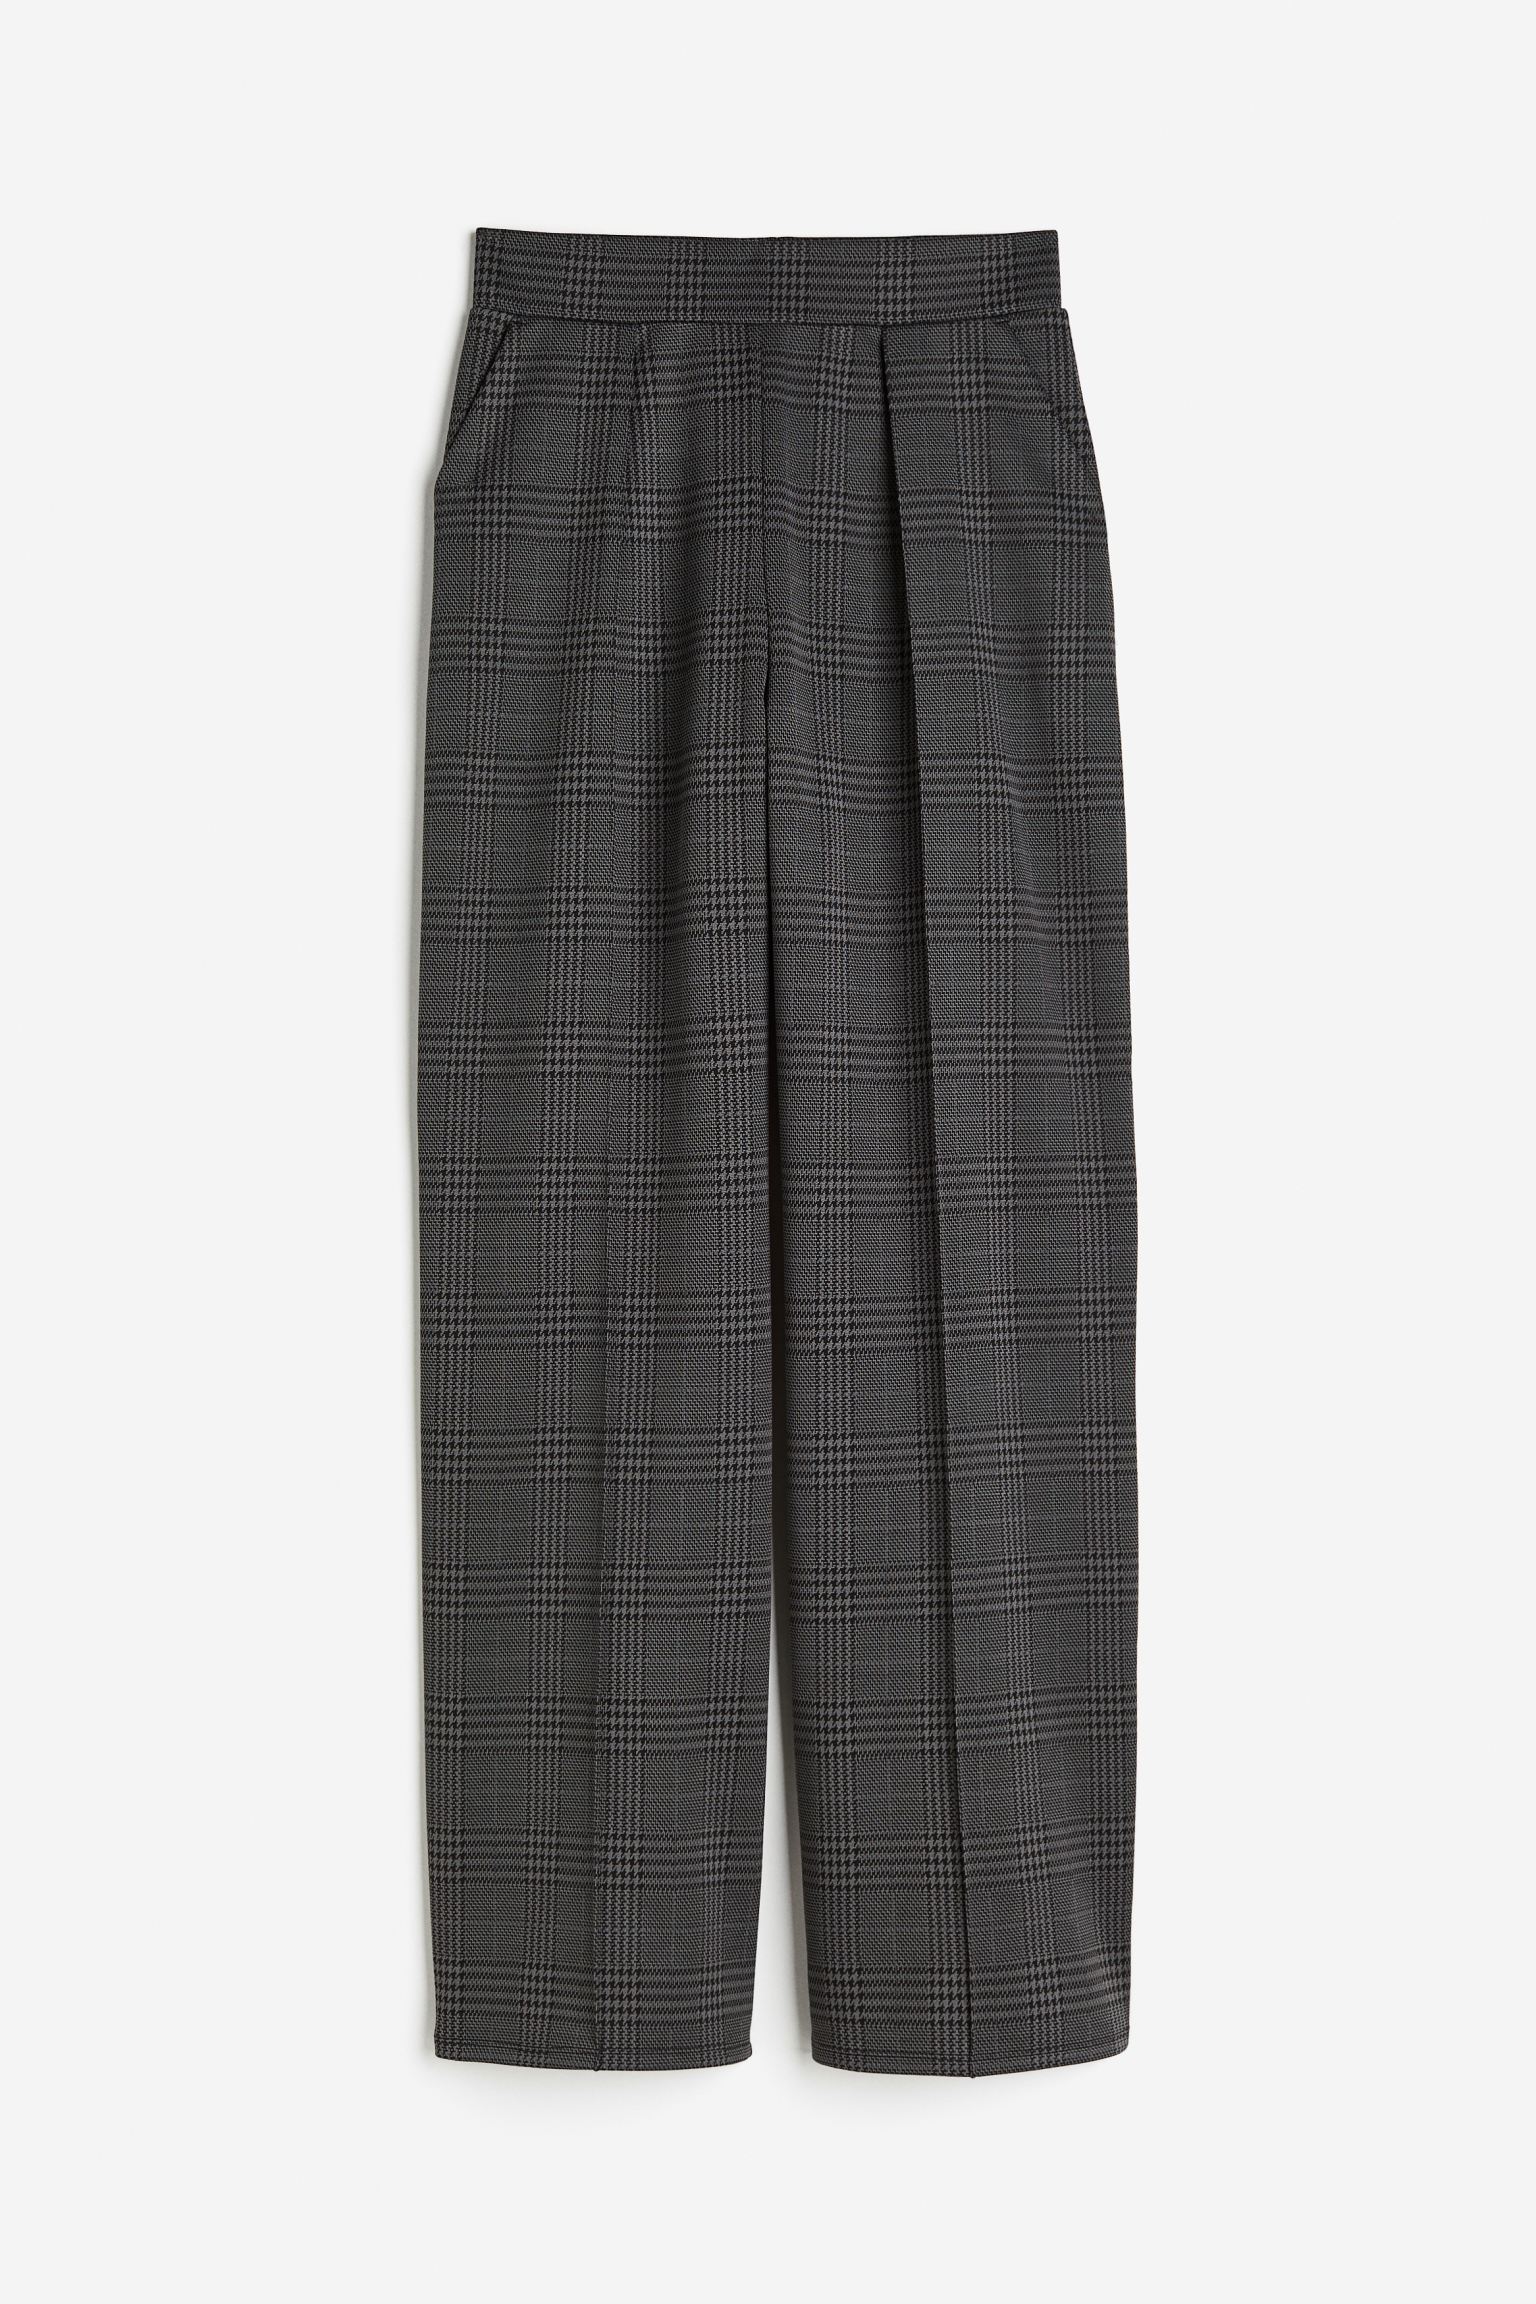 Брюки H&M High-waist Dress, темно-серый широкие креповые брюки sayakat со складками спереди ted baker цвет coral